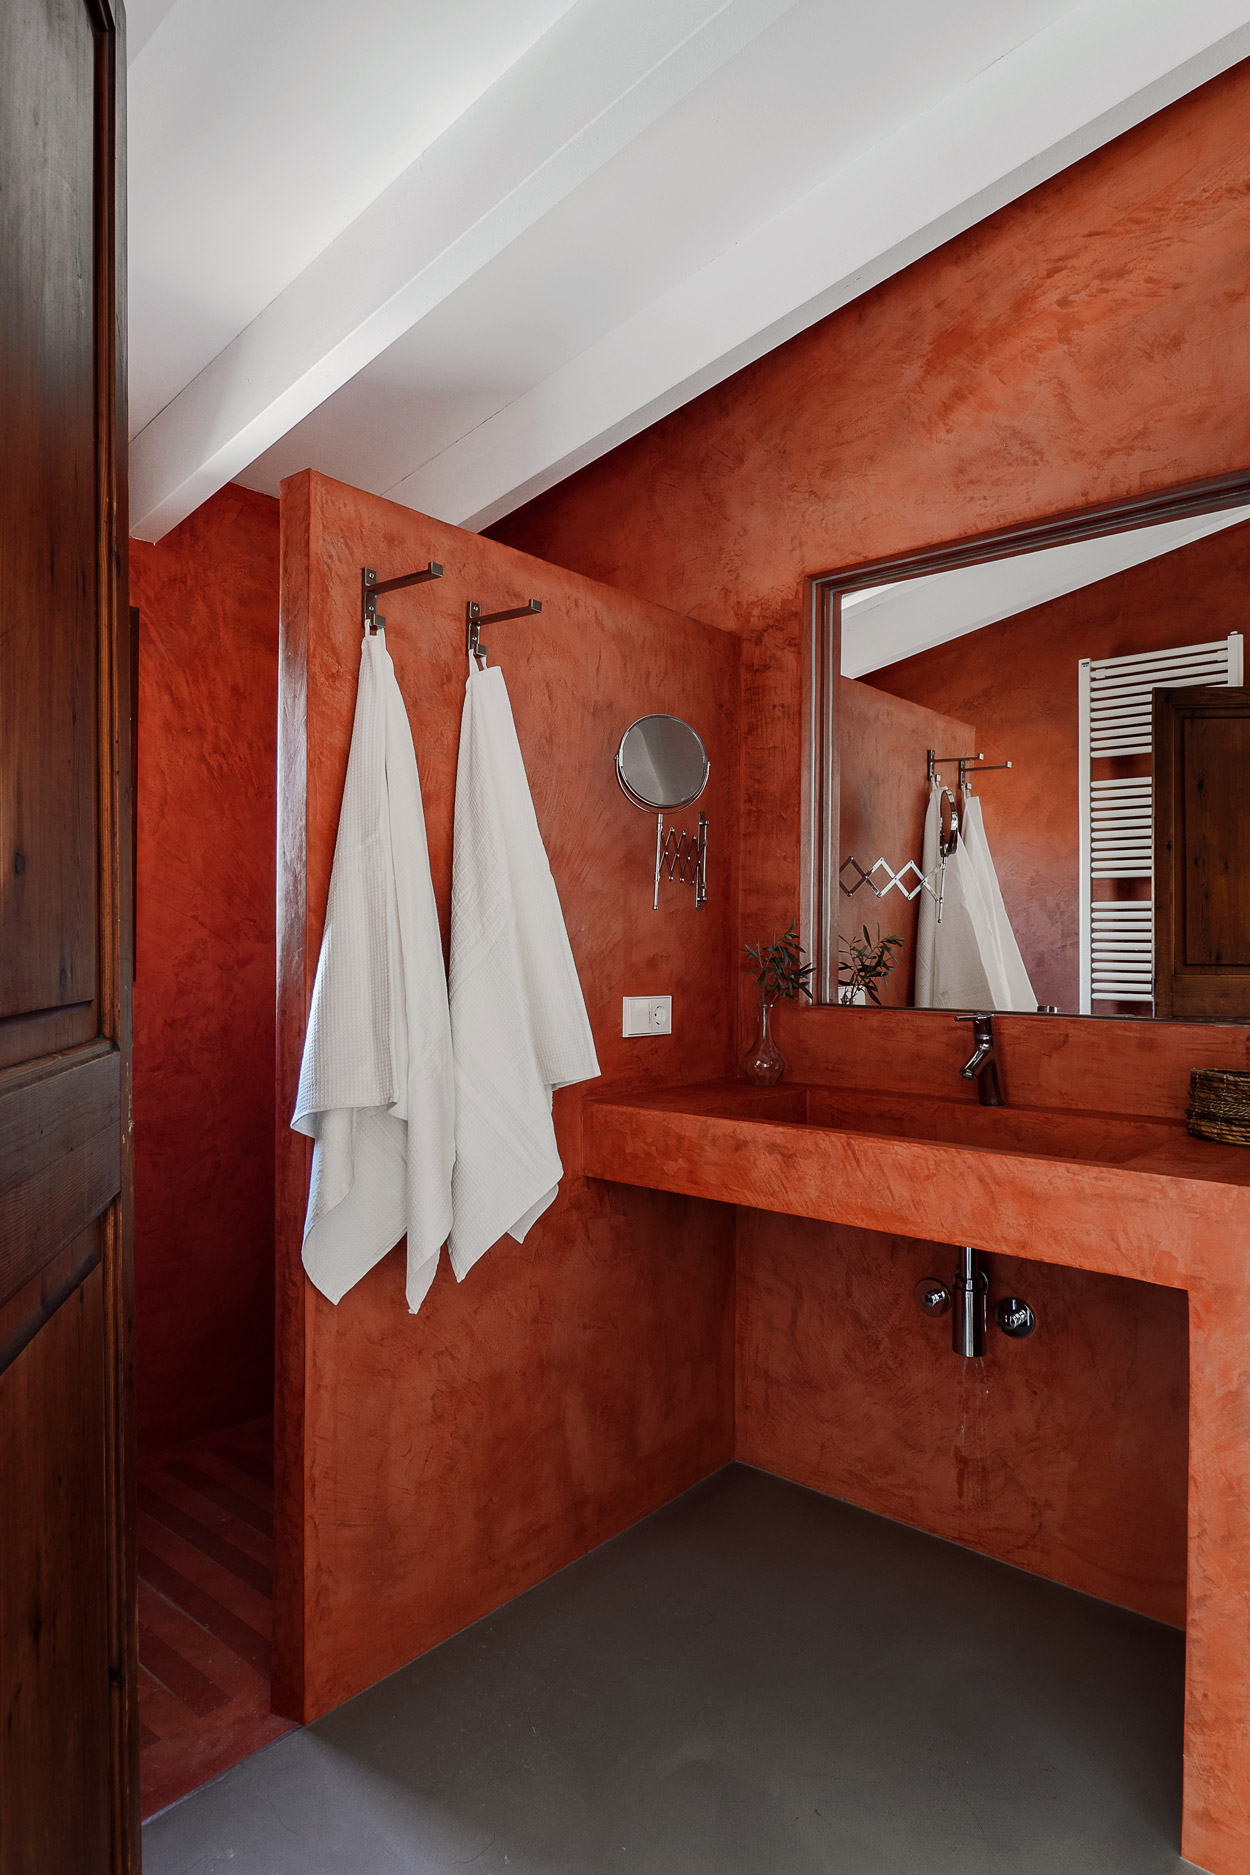 salle de bain couleur terracotta